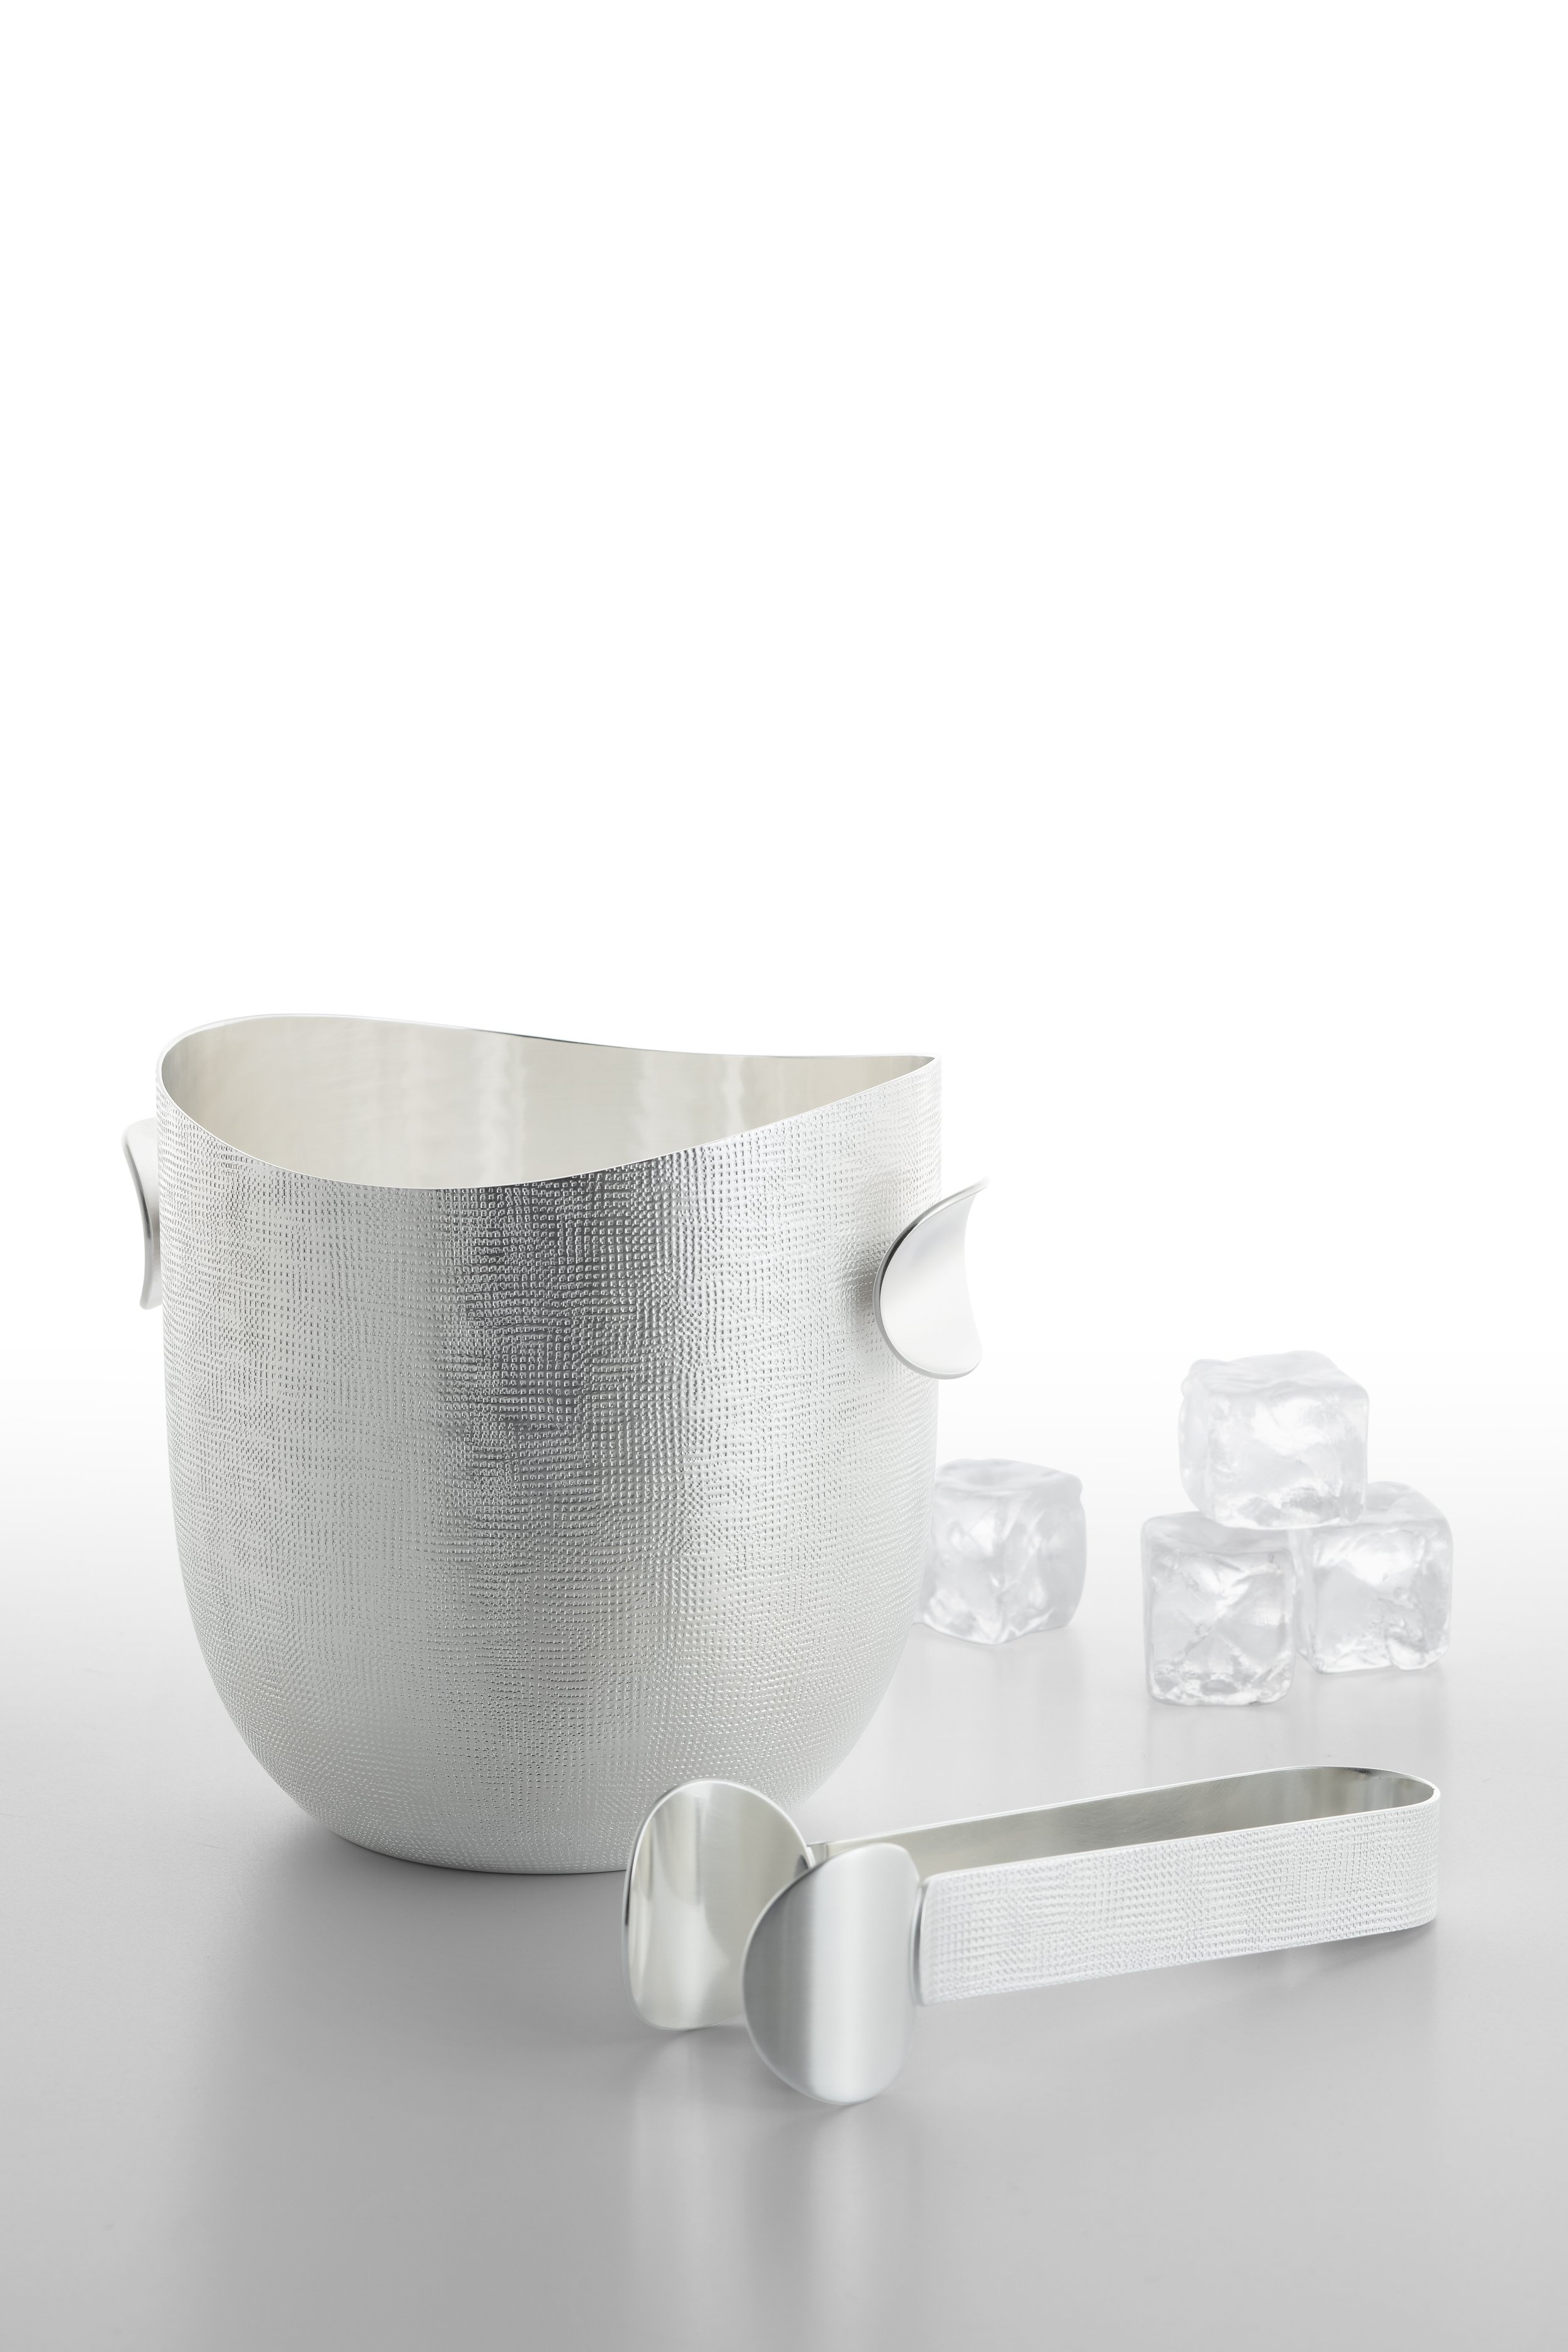 Zanetto Ice bucket.jpg